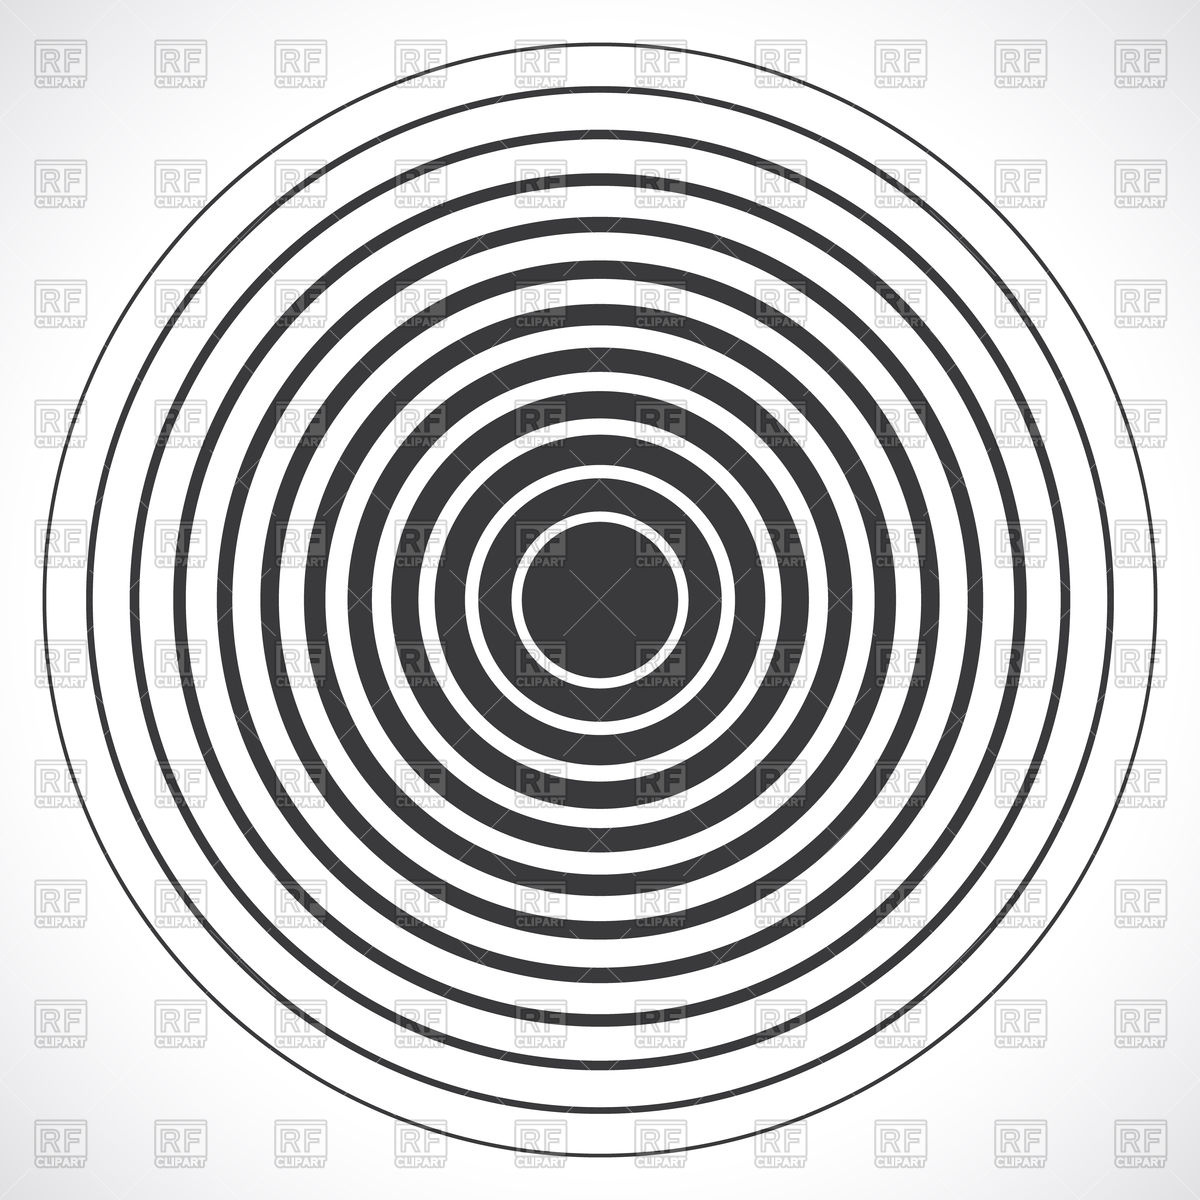 Кружочки без звука. Расходящиеся круги. Концентрические круги. Концентрические круги на воде. Концентрические линии.